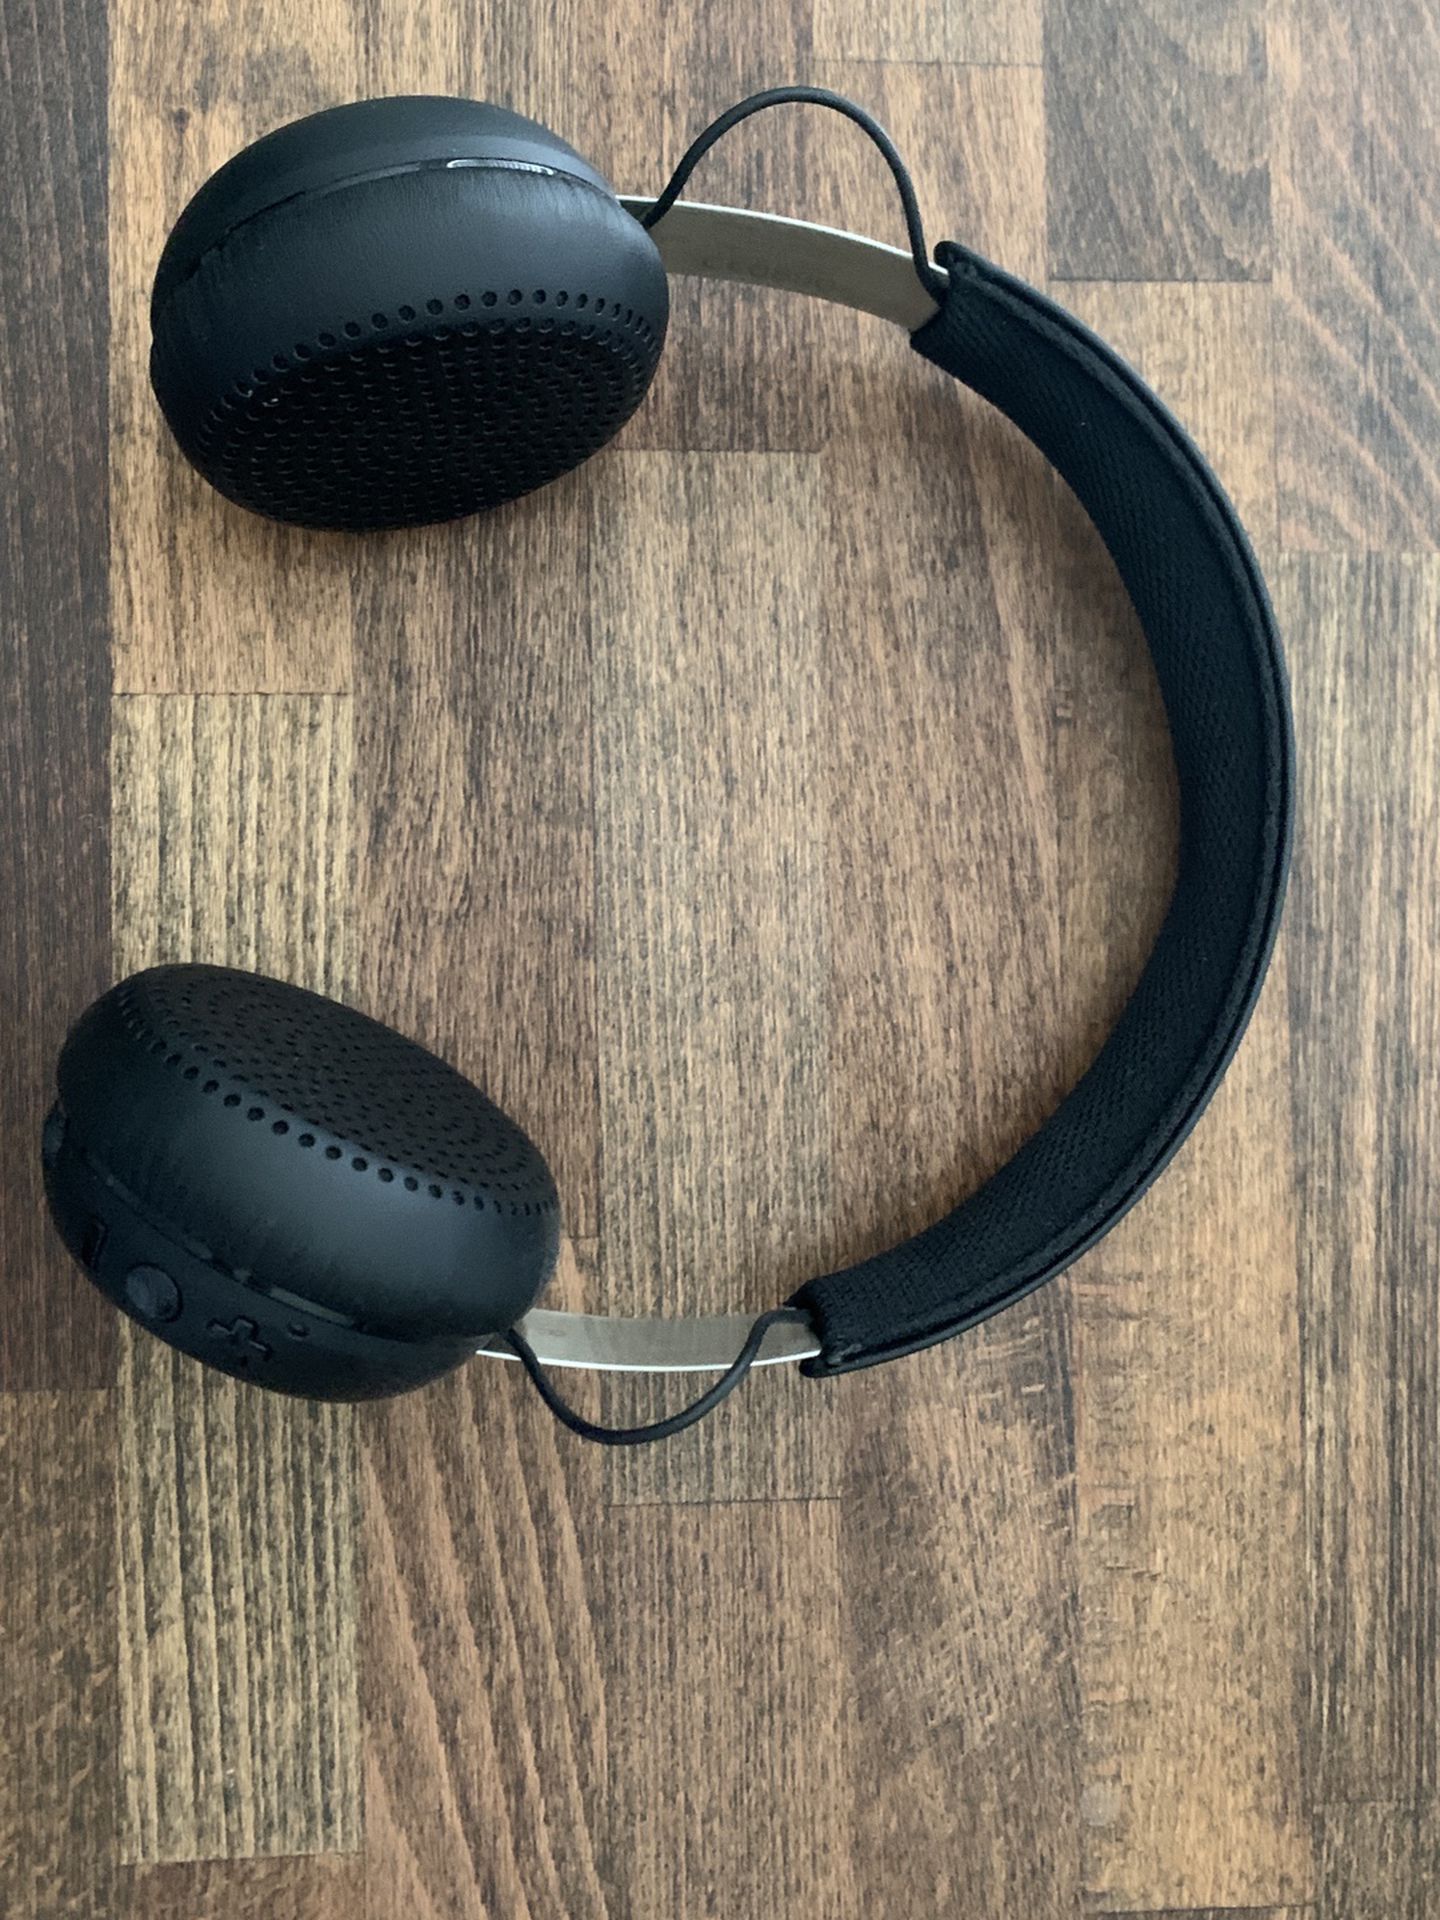 Skullcandy wireless on-ear headphones